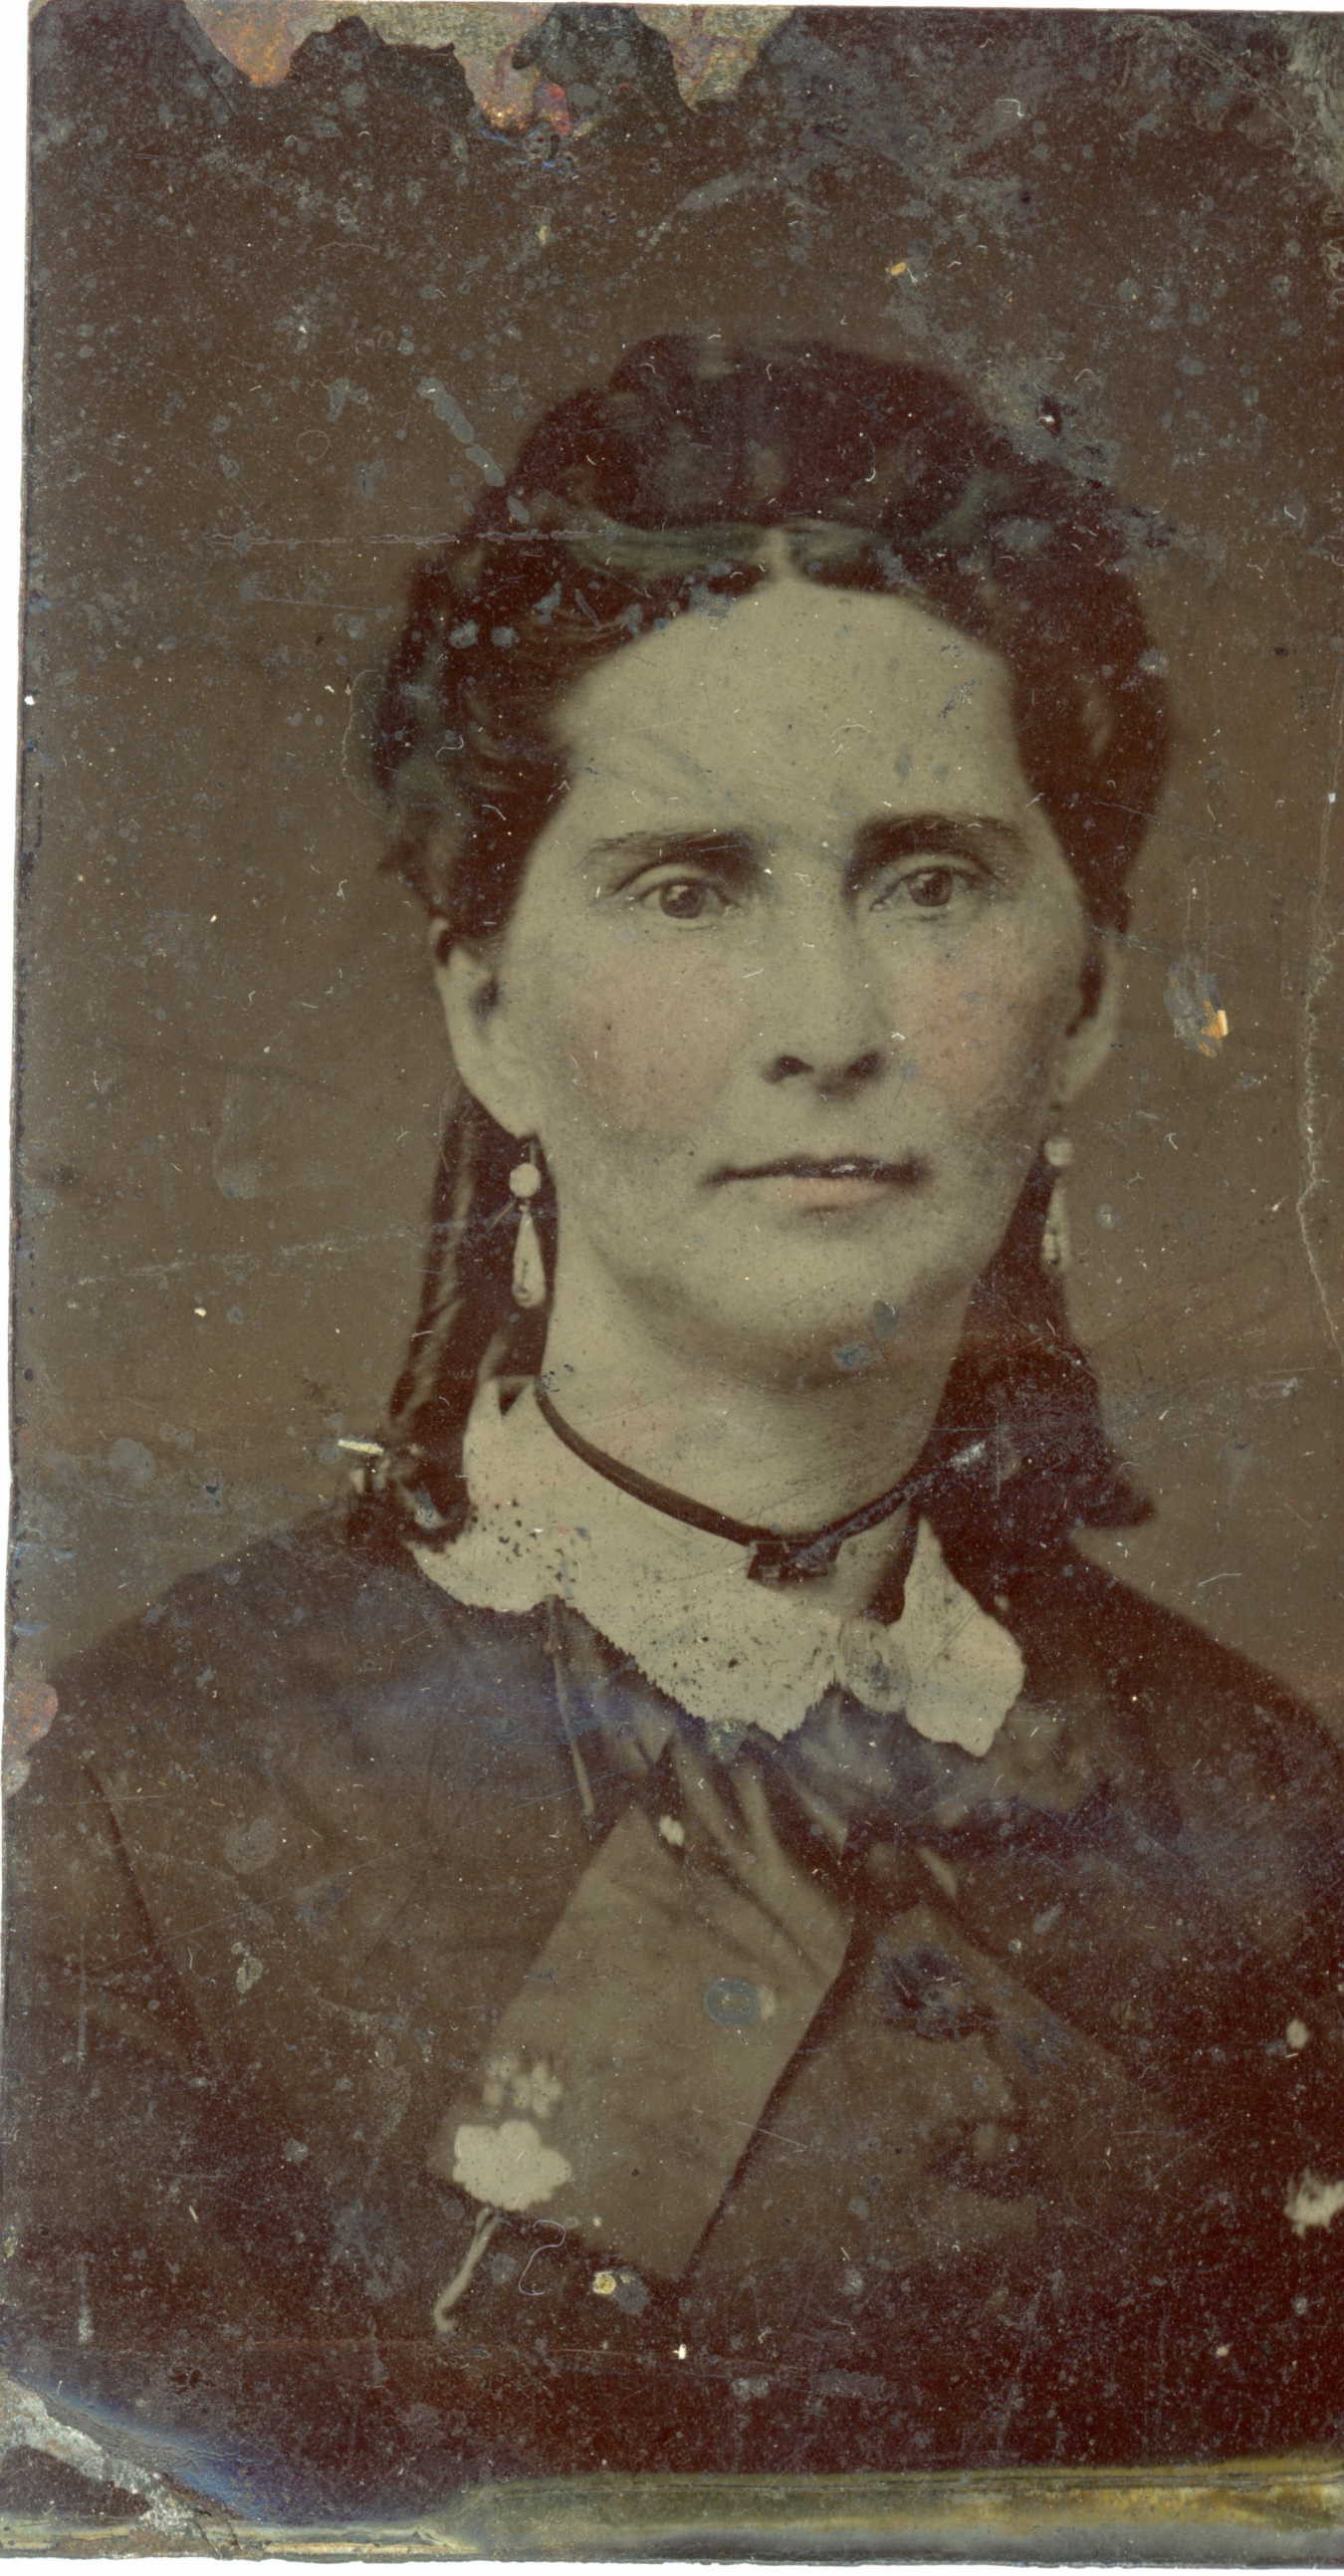  Elizabeth Ankrom Francis (1830, Va.-1890, Seward, Neb.) was Bob’s great grandmother, the mother of Charles Howe Francis, the grandmother of James William Francis. 